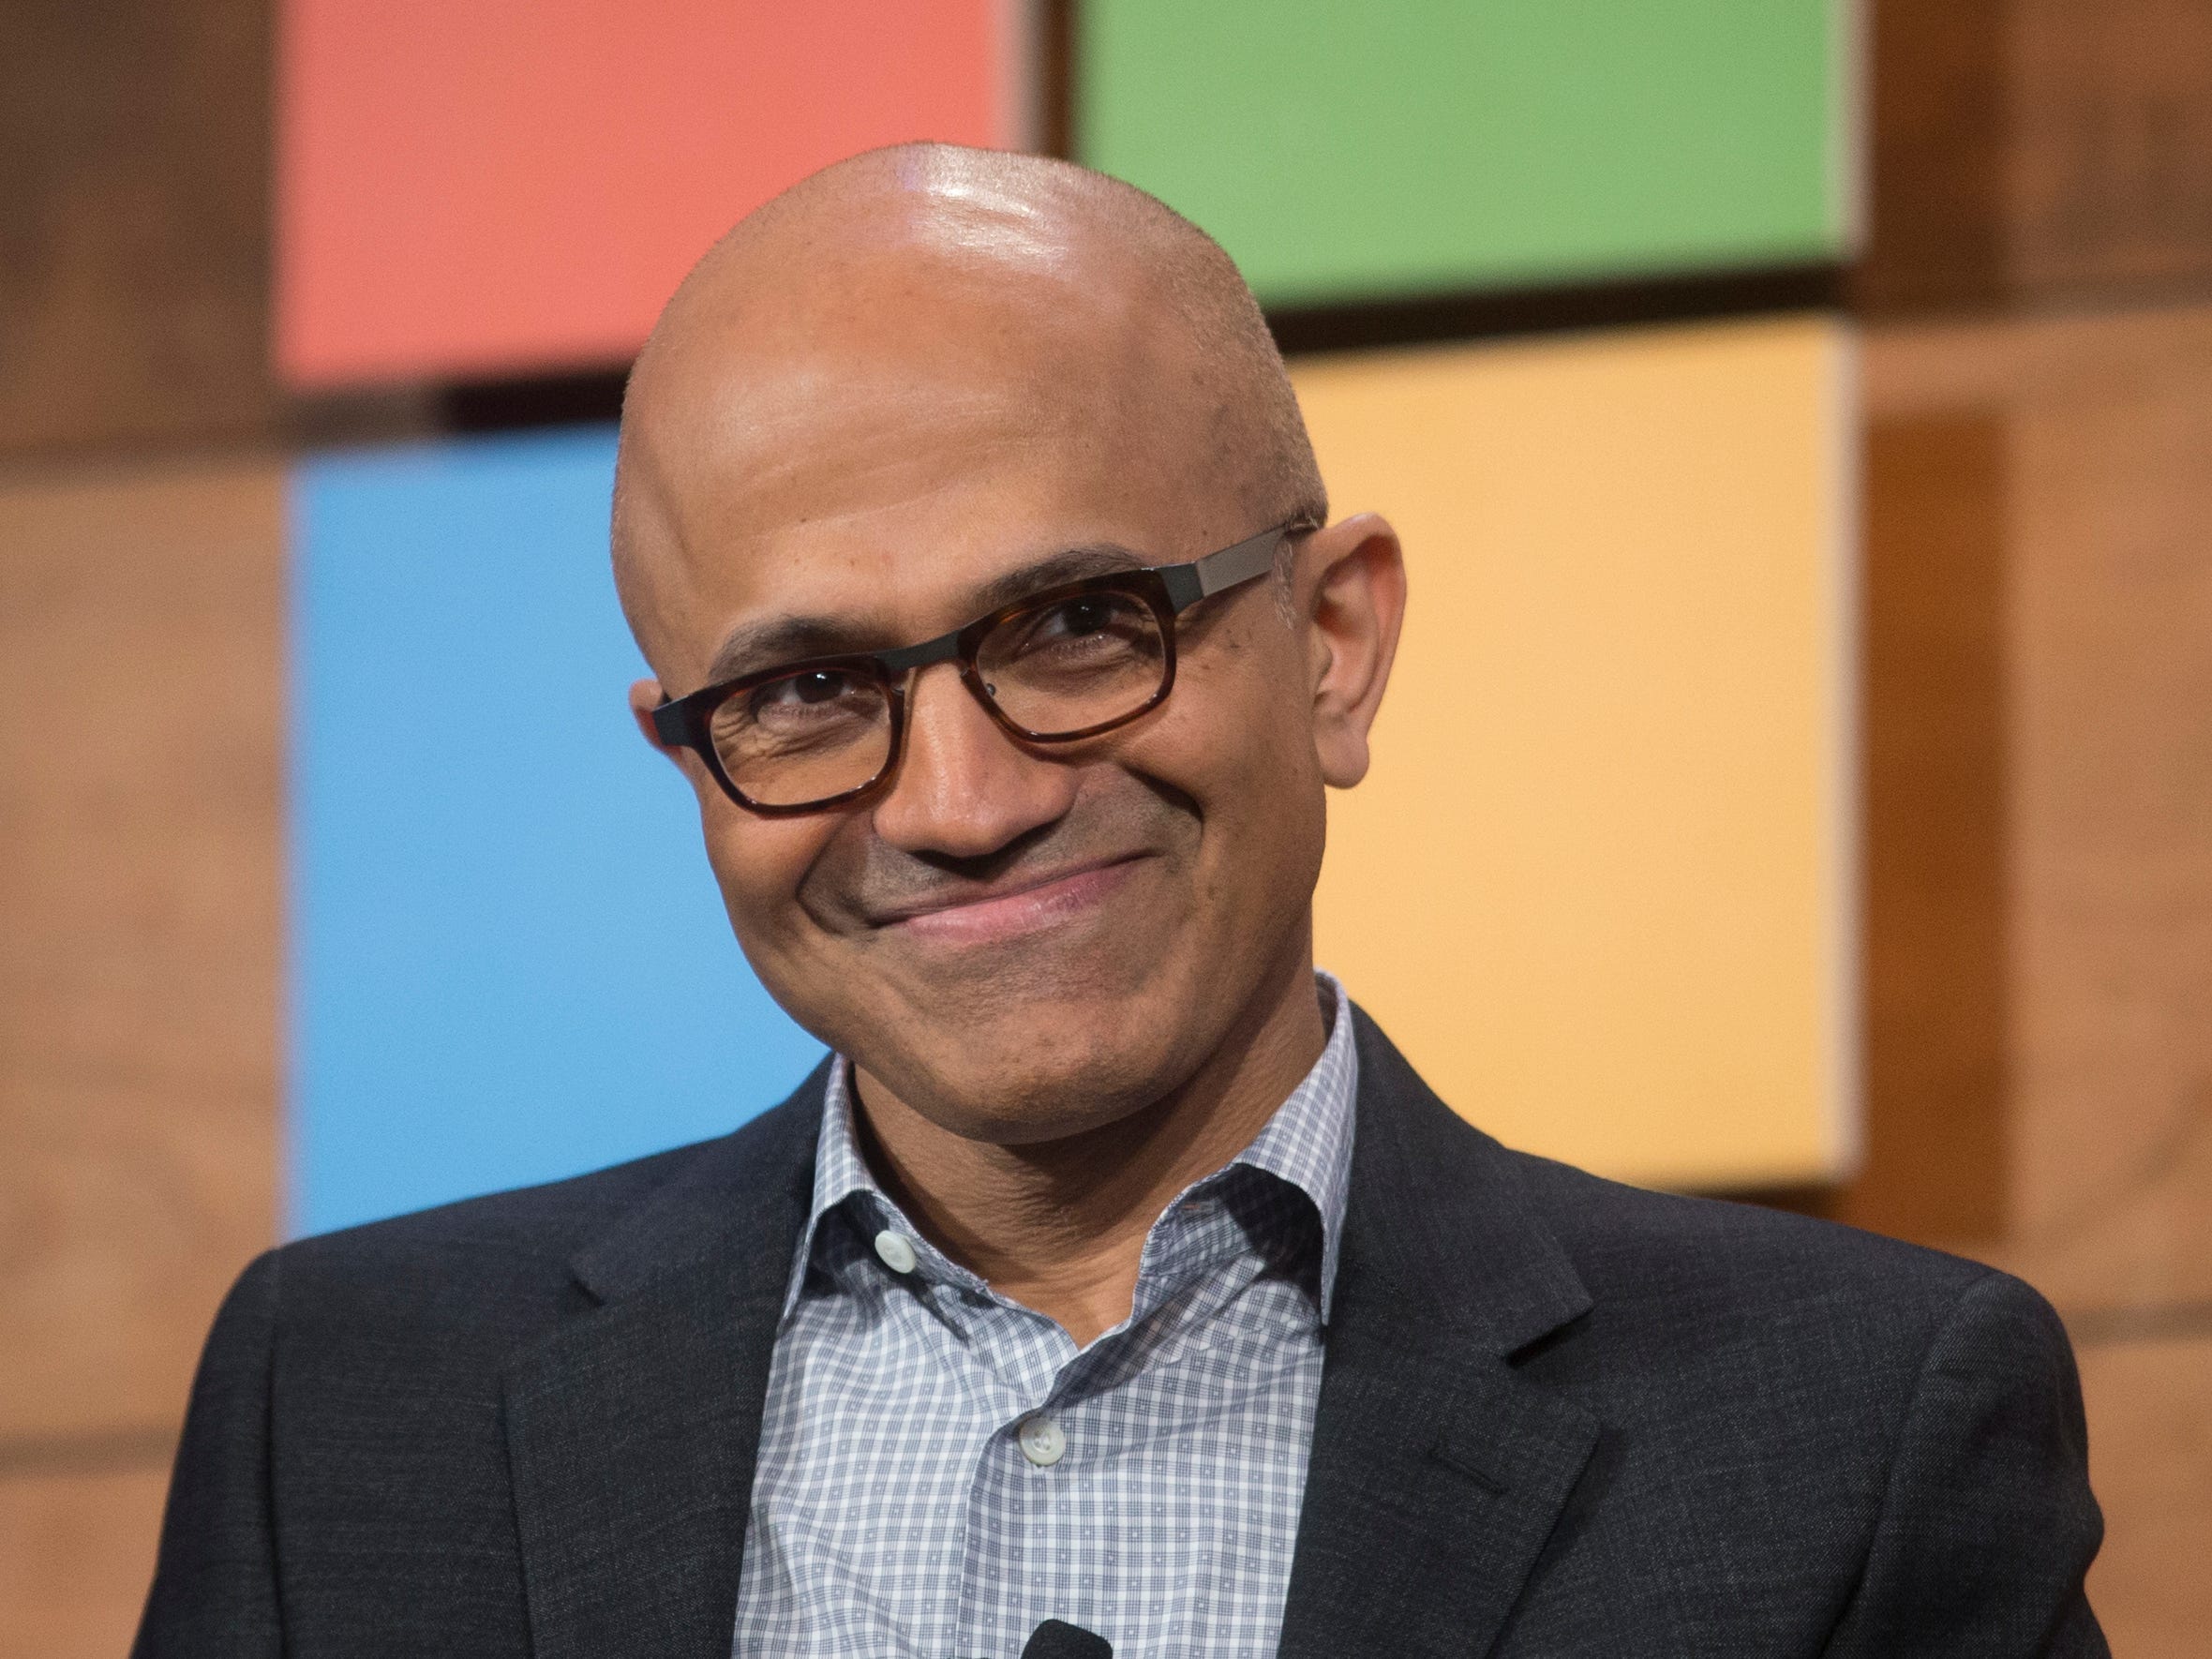 Satya Nadella is the CEO of Microsoft.